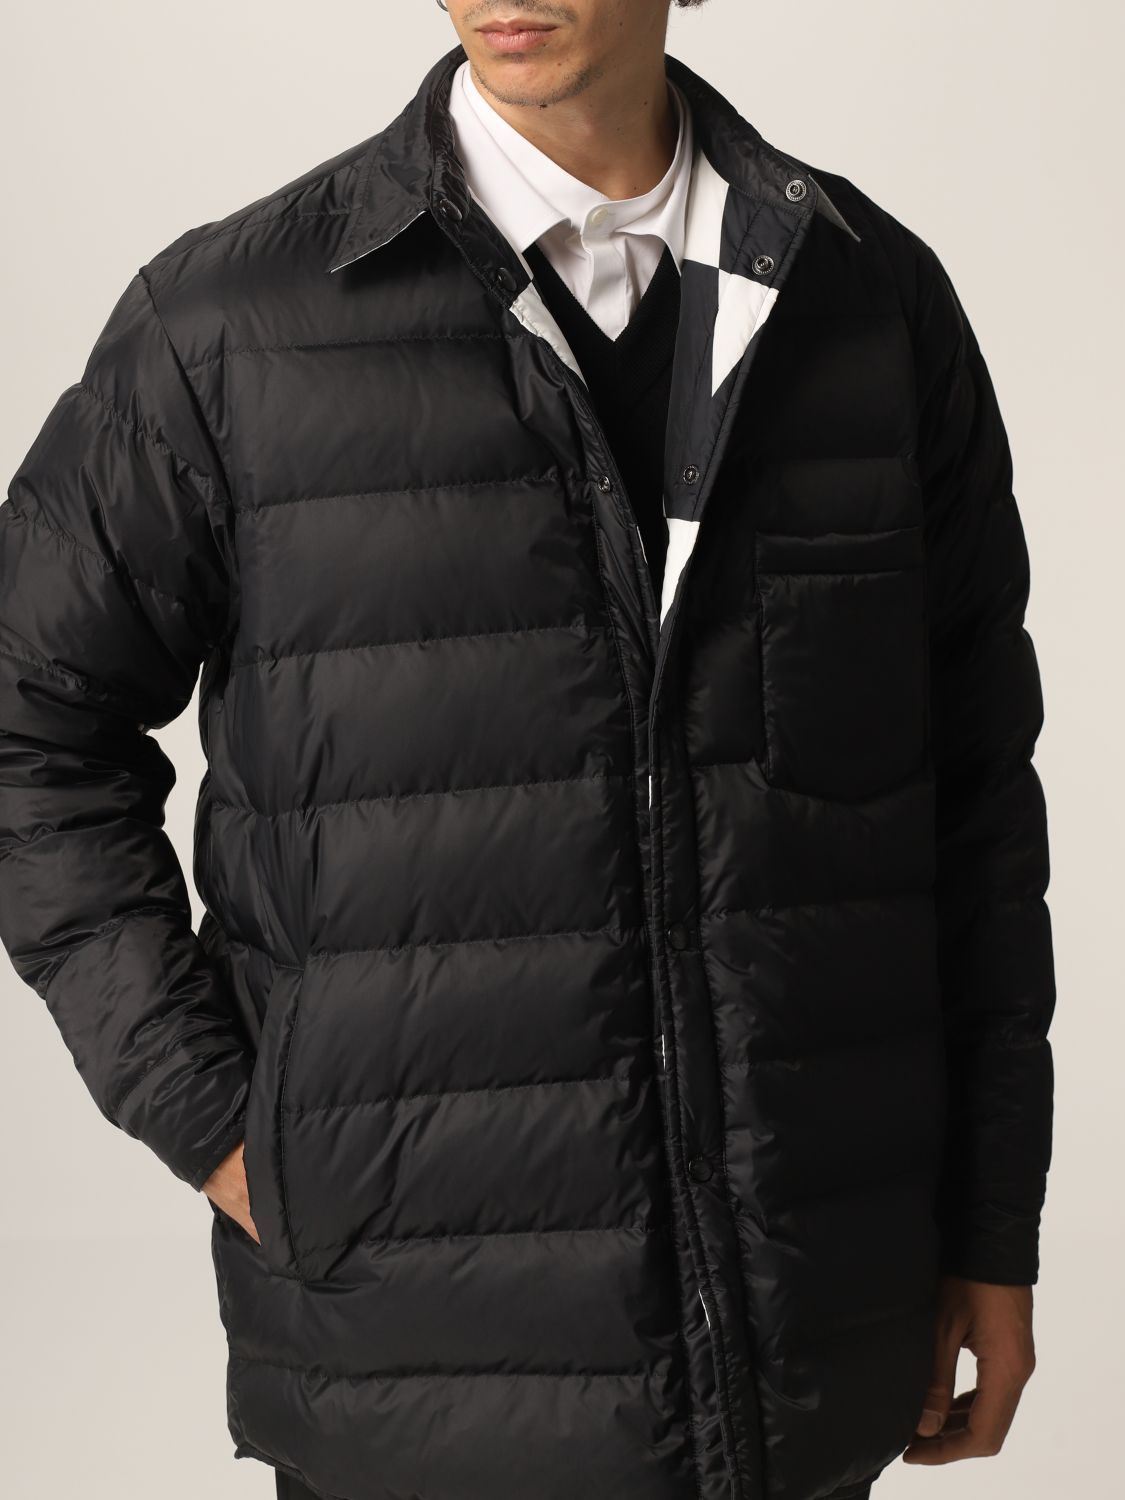 Valentino jacket for men